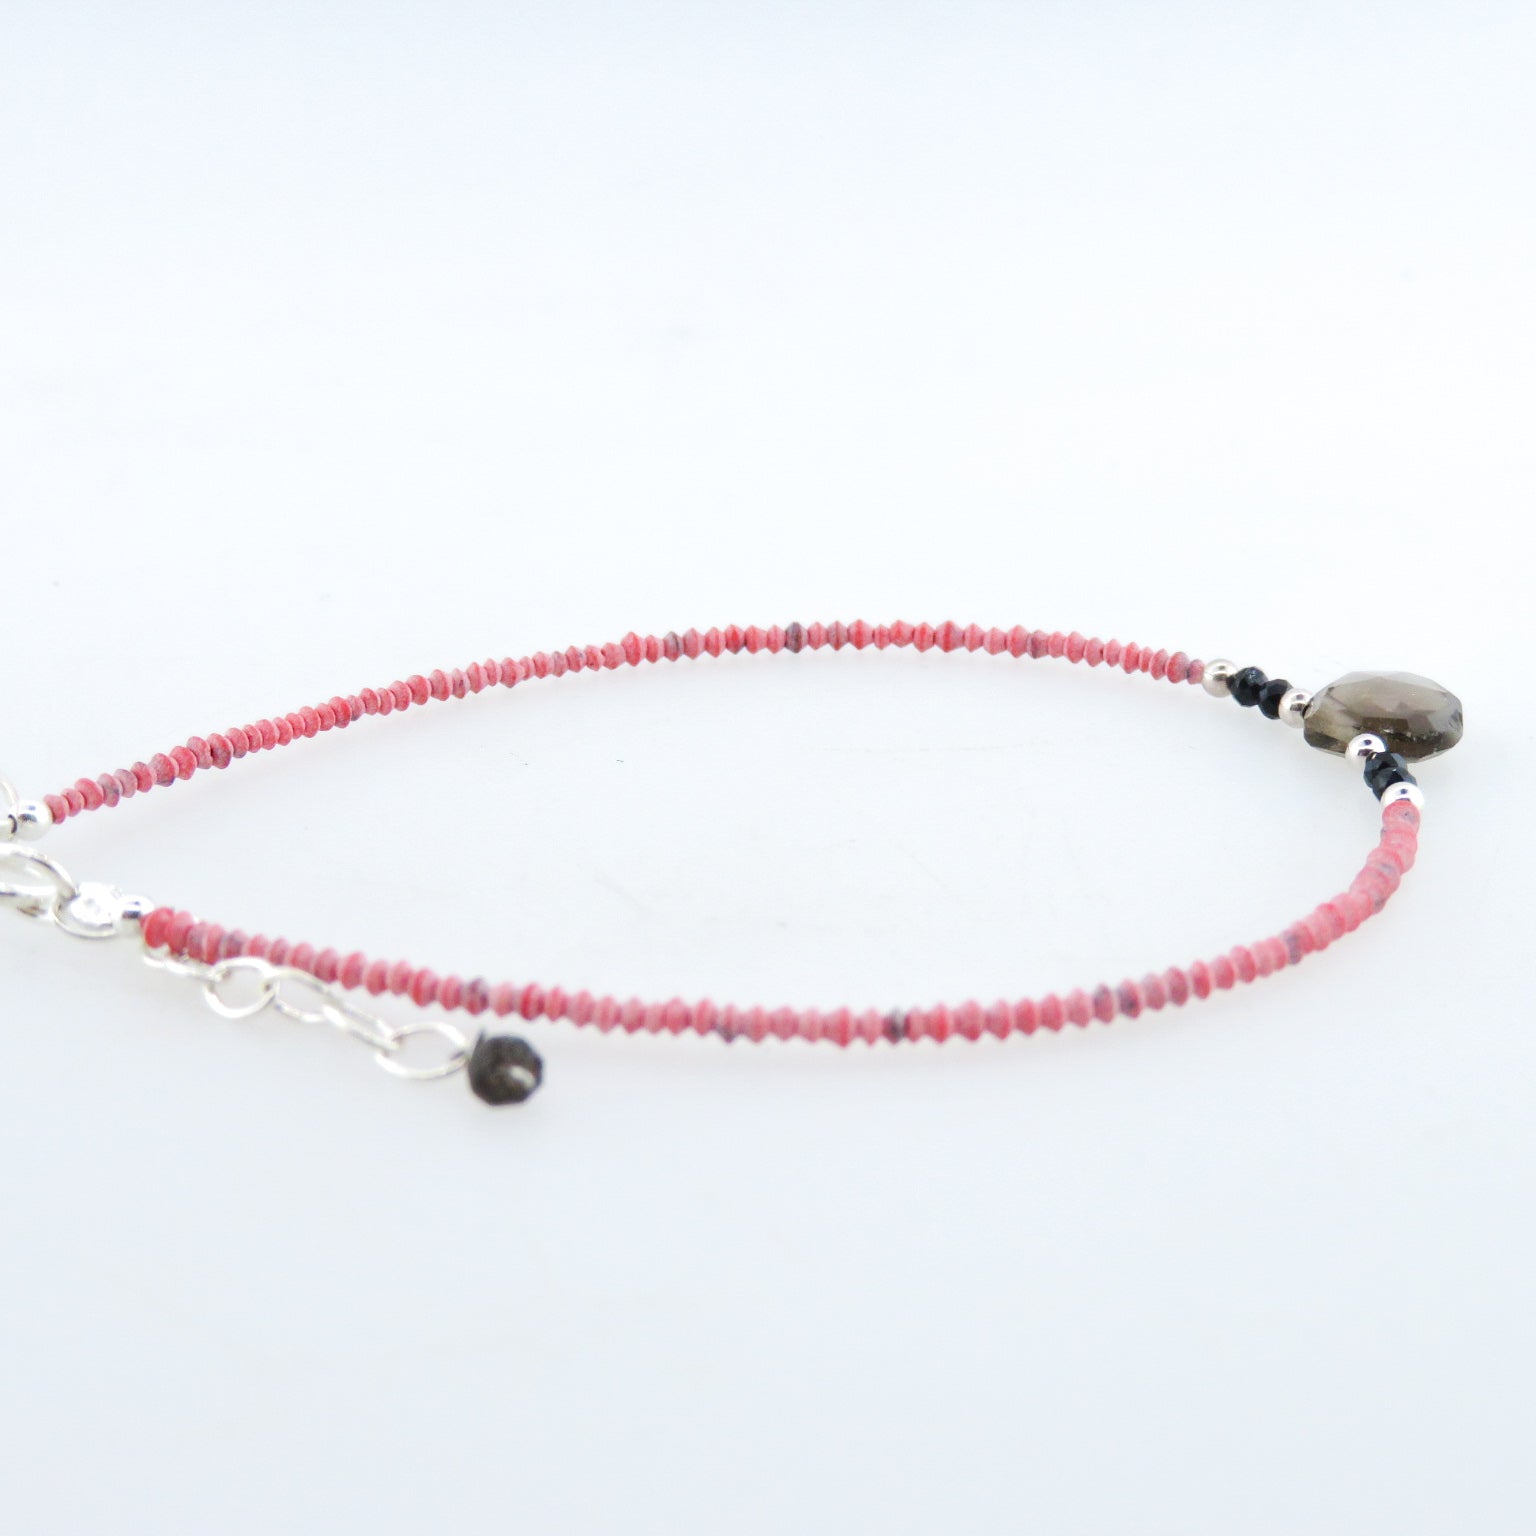 Coral Bracelet with Smokey Quartz, Black Onyx and Silver Beads